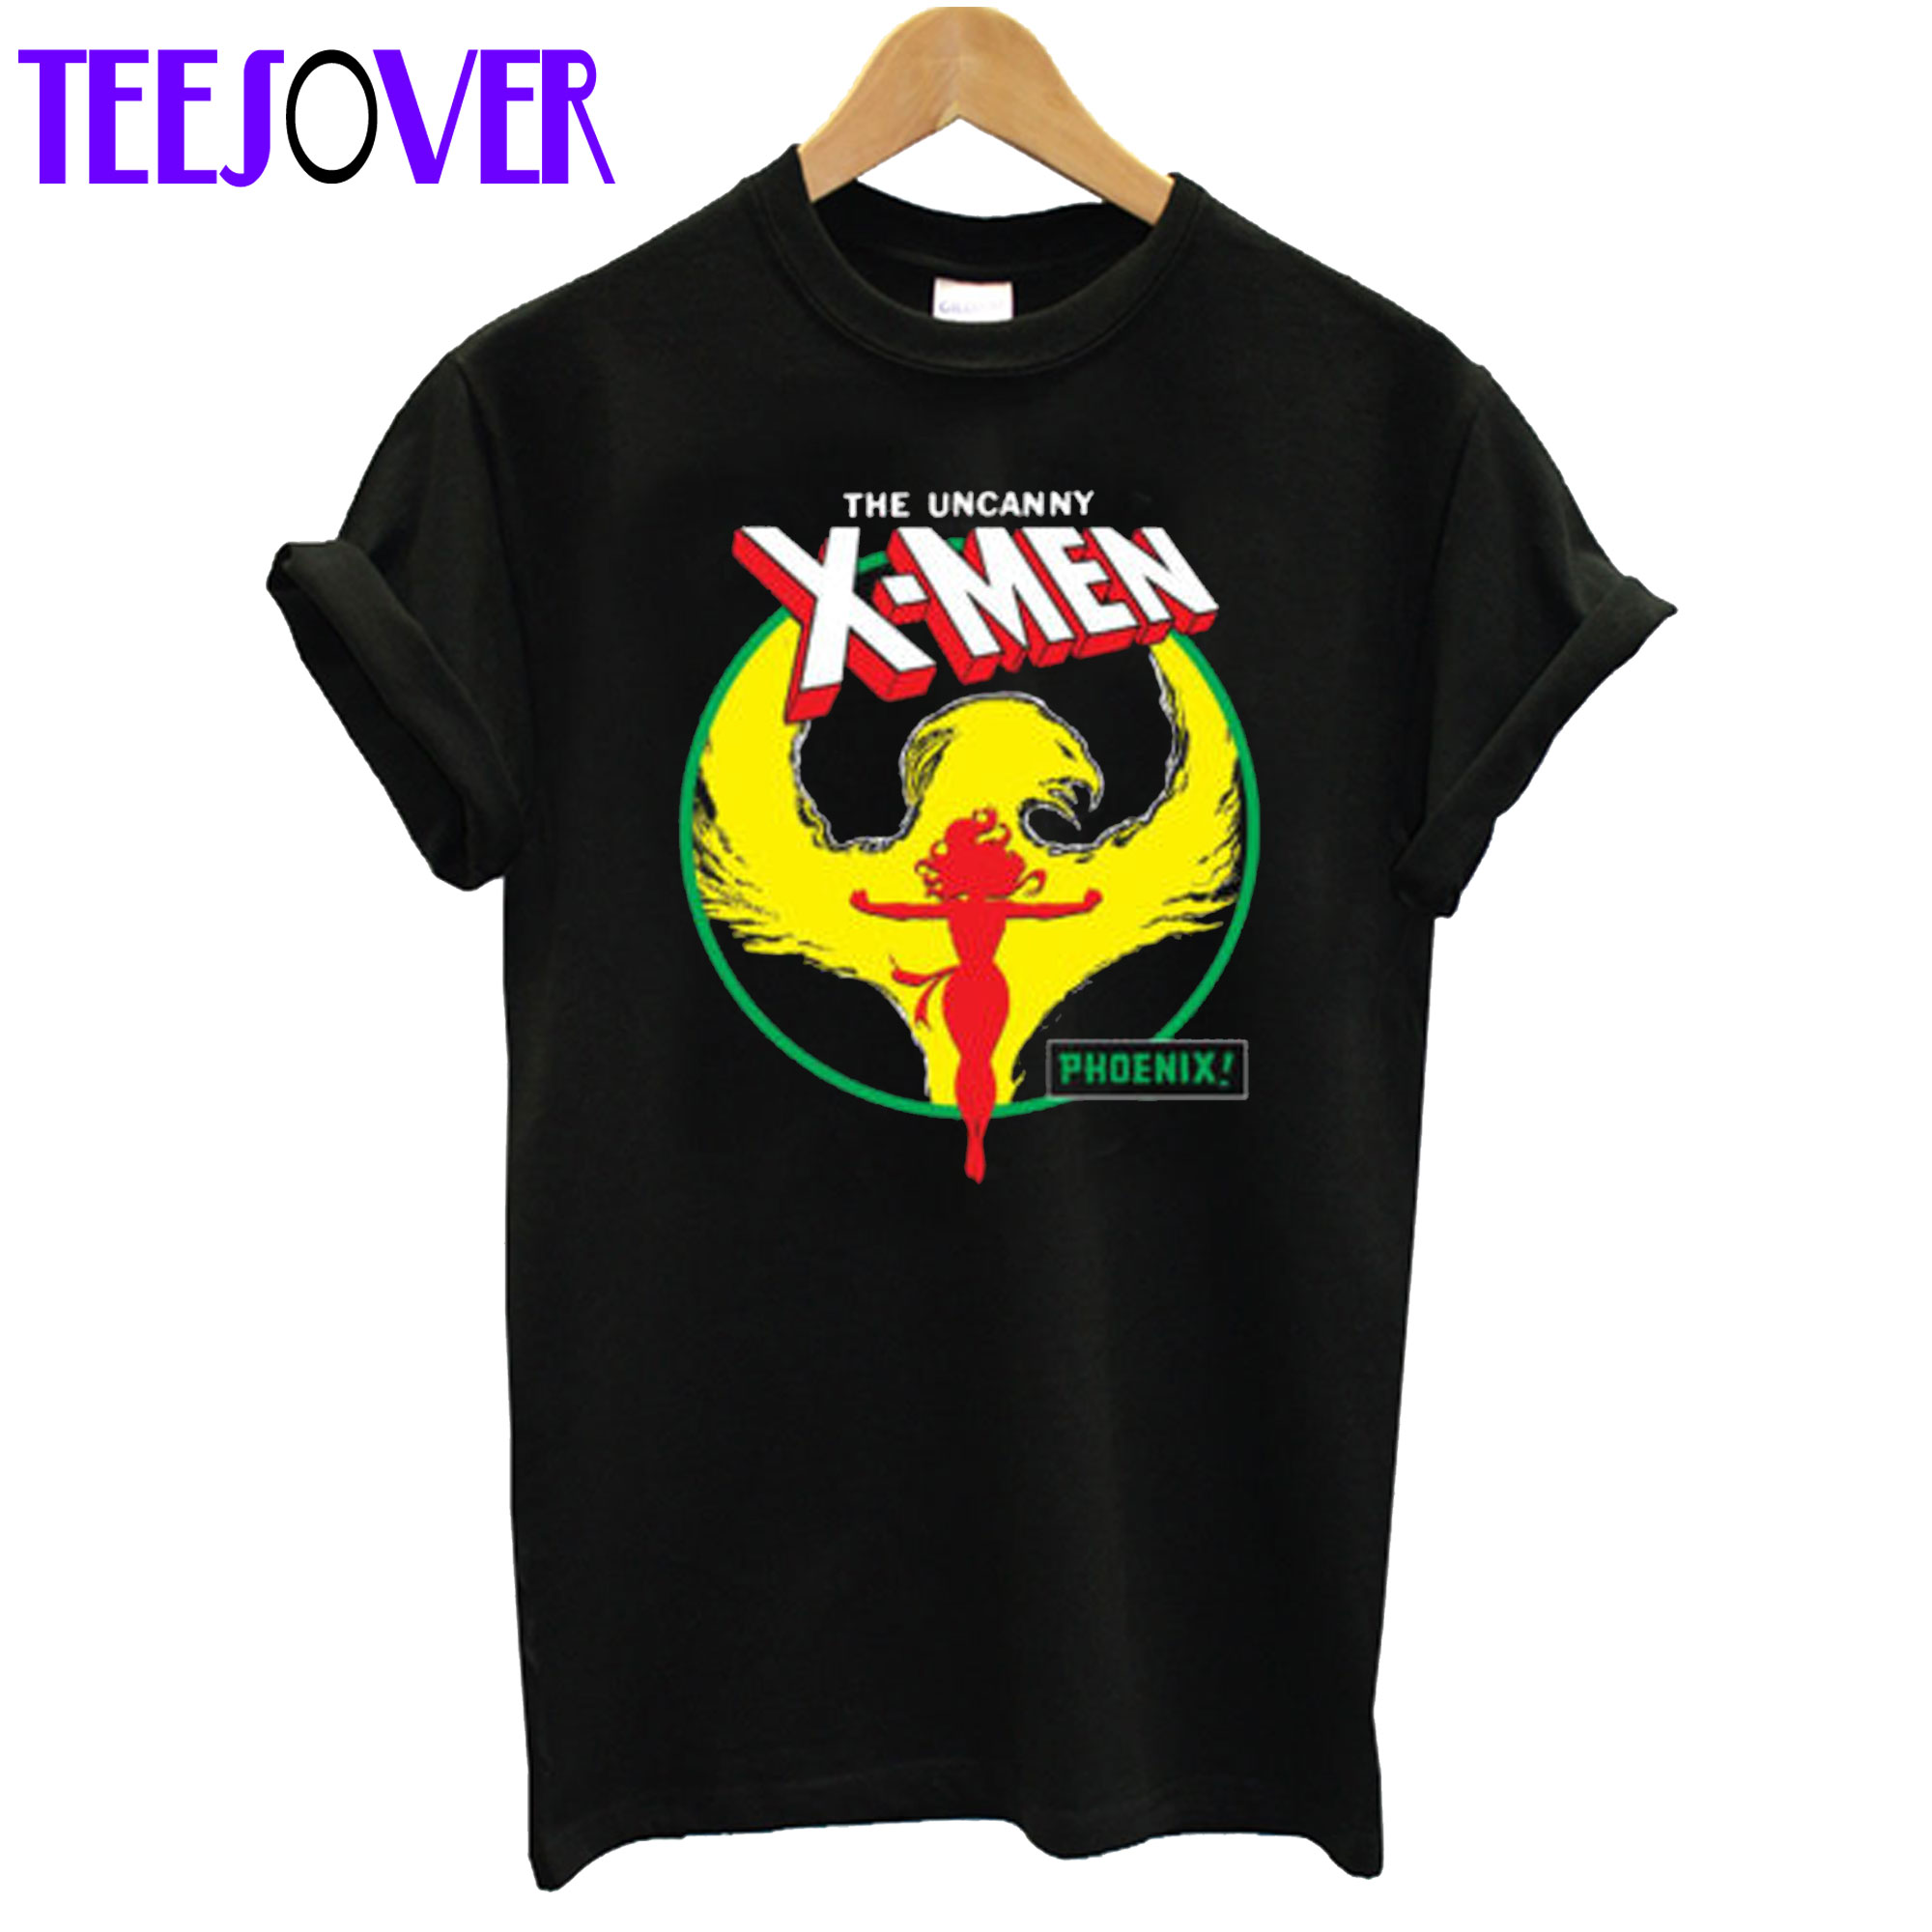 X-Men Dark Phoenix T-Shirt